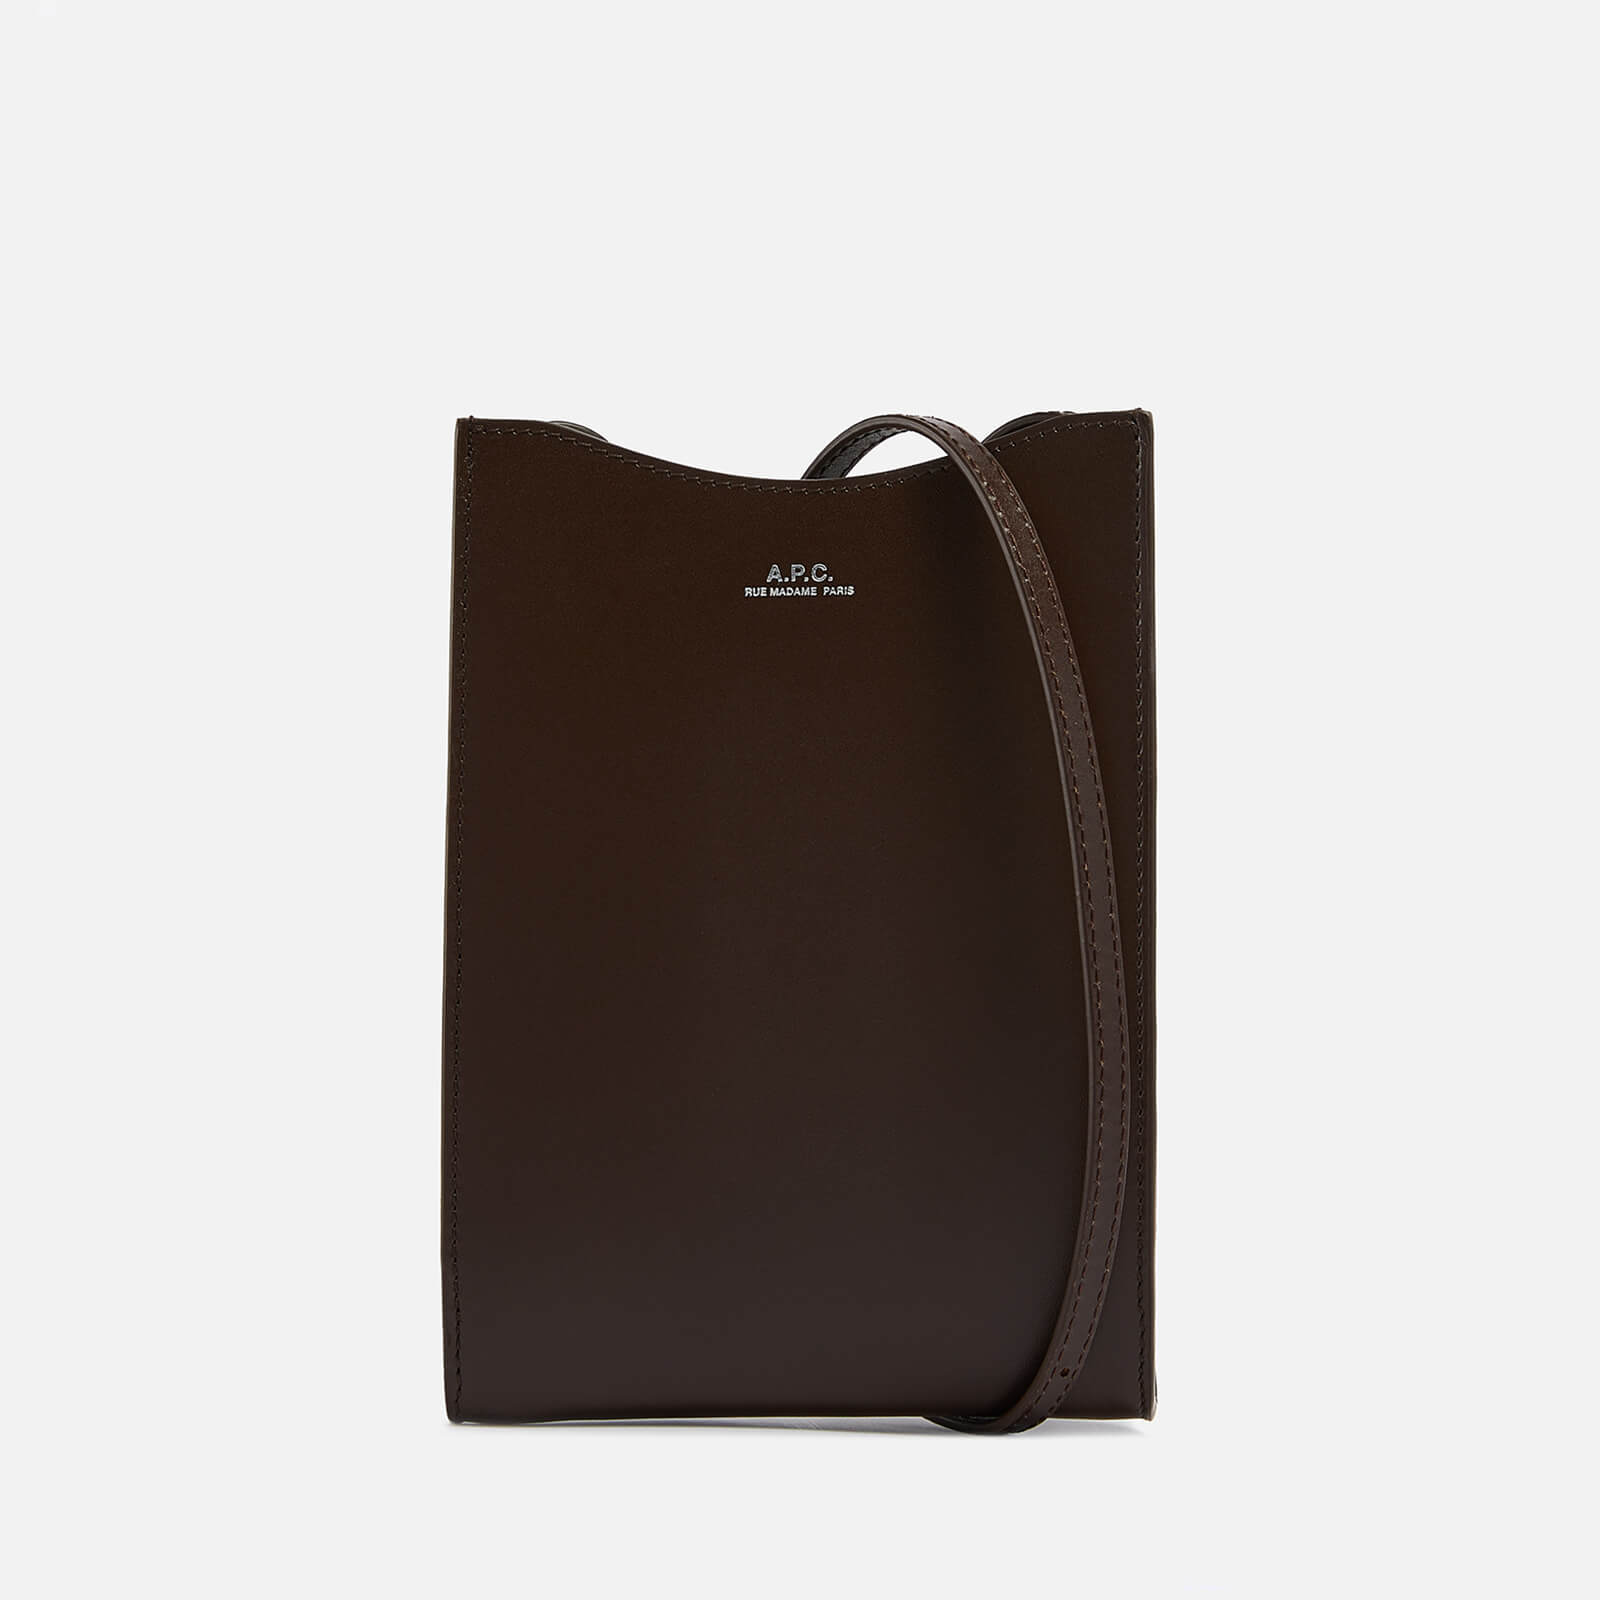 A.P.C. Jamie Leather Shoulder Bag